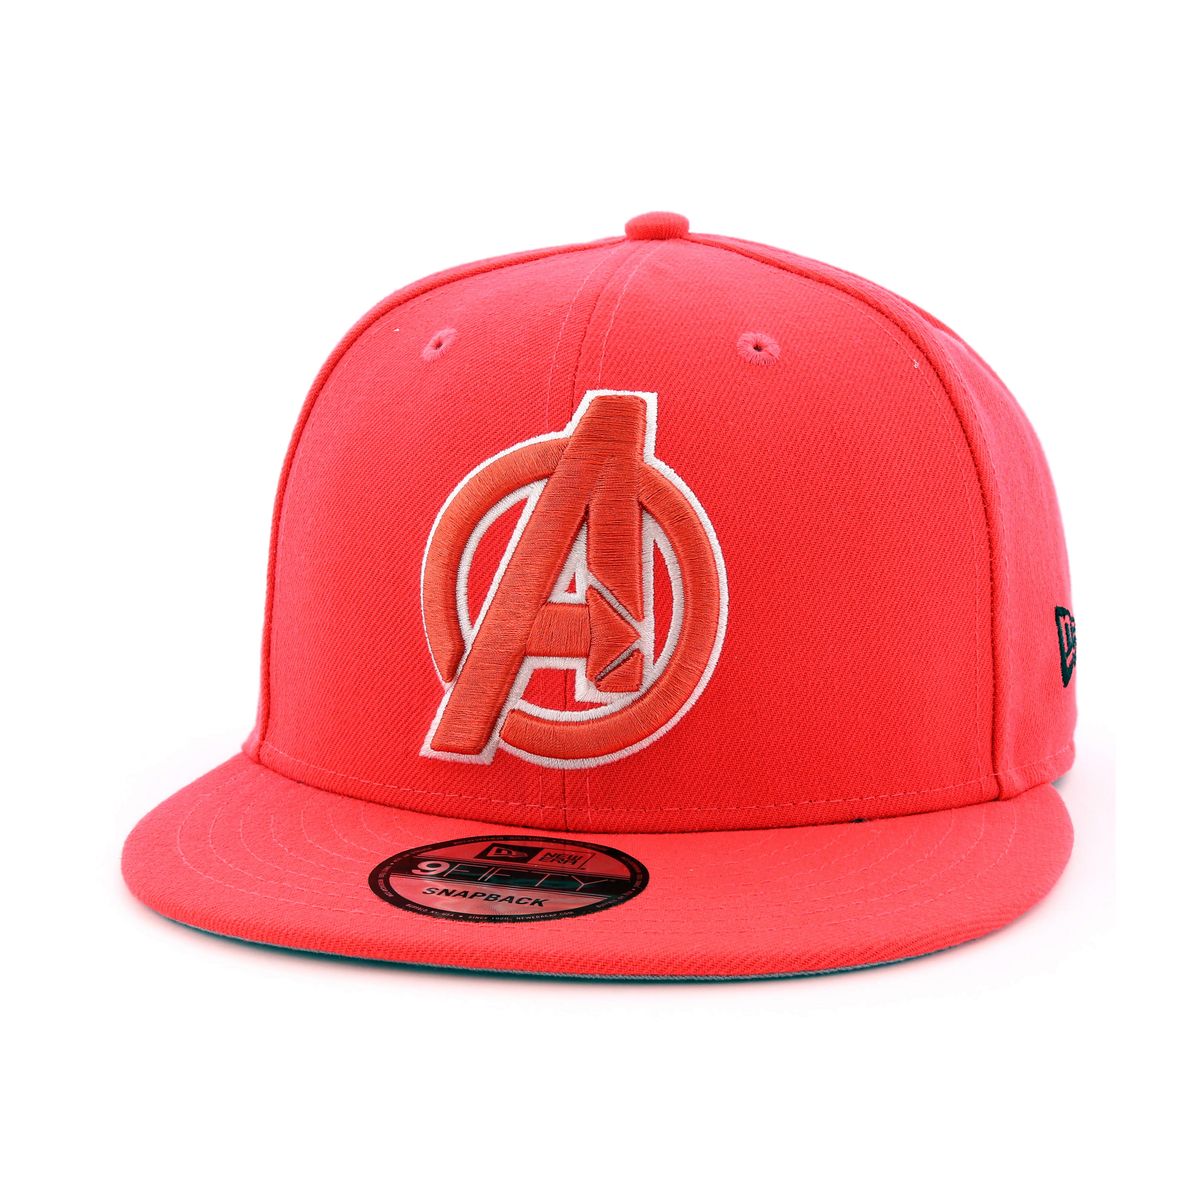 New Era Avengers Men's Cap Red